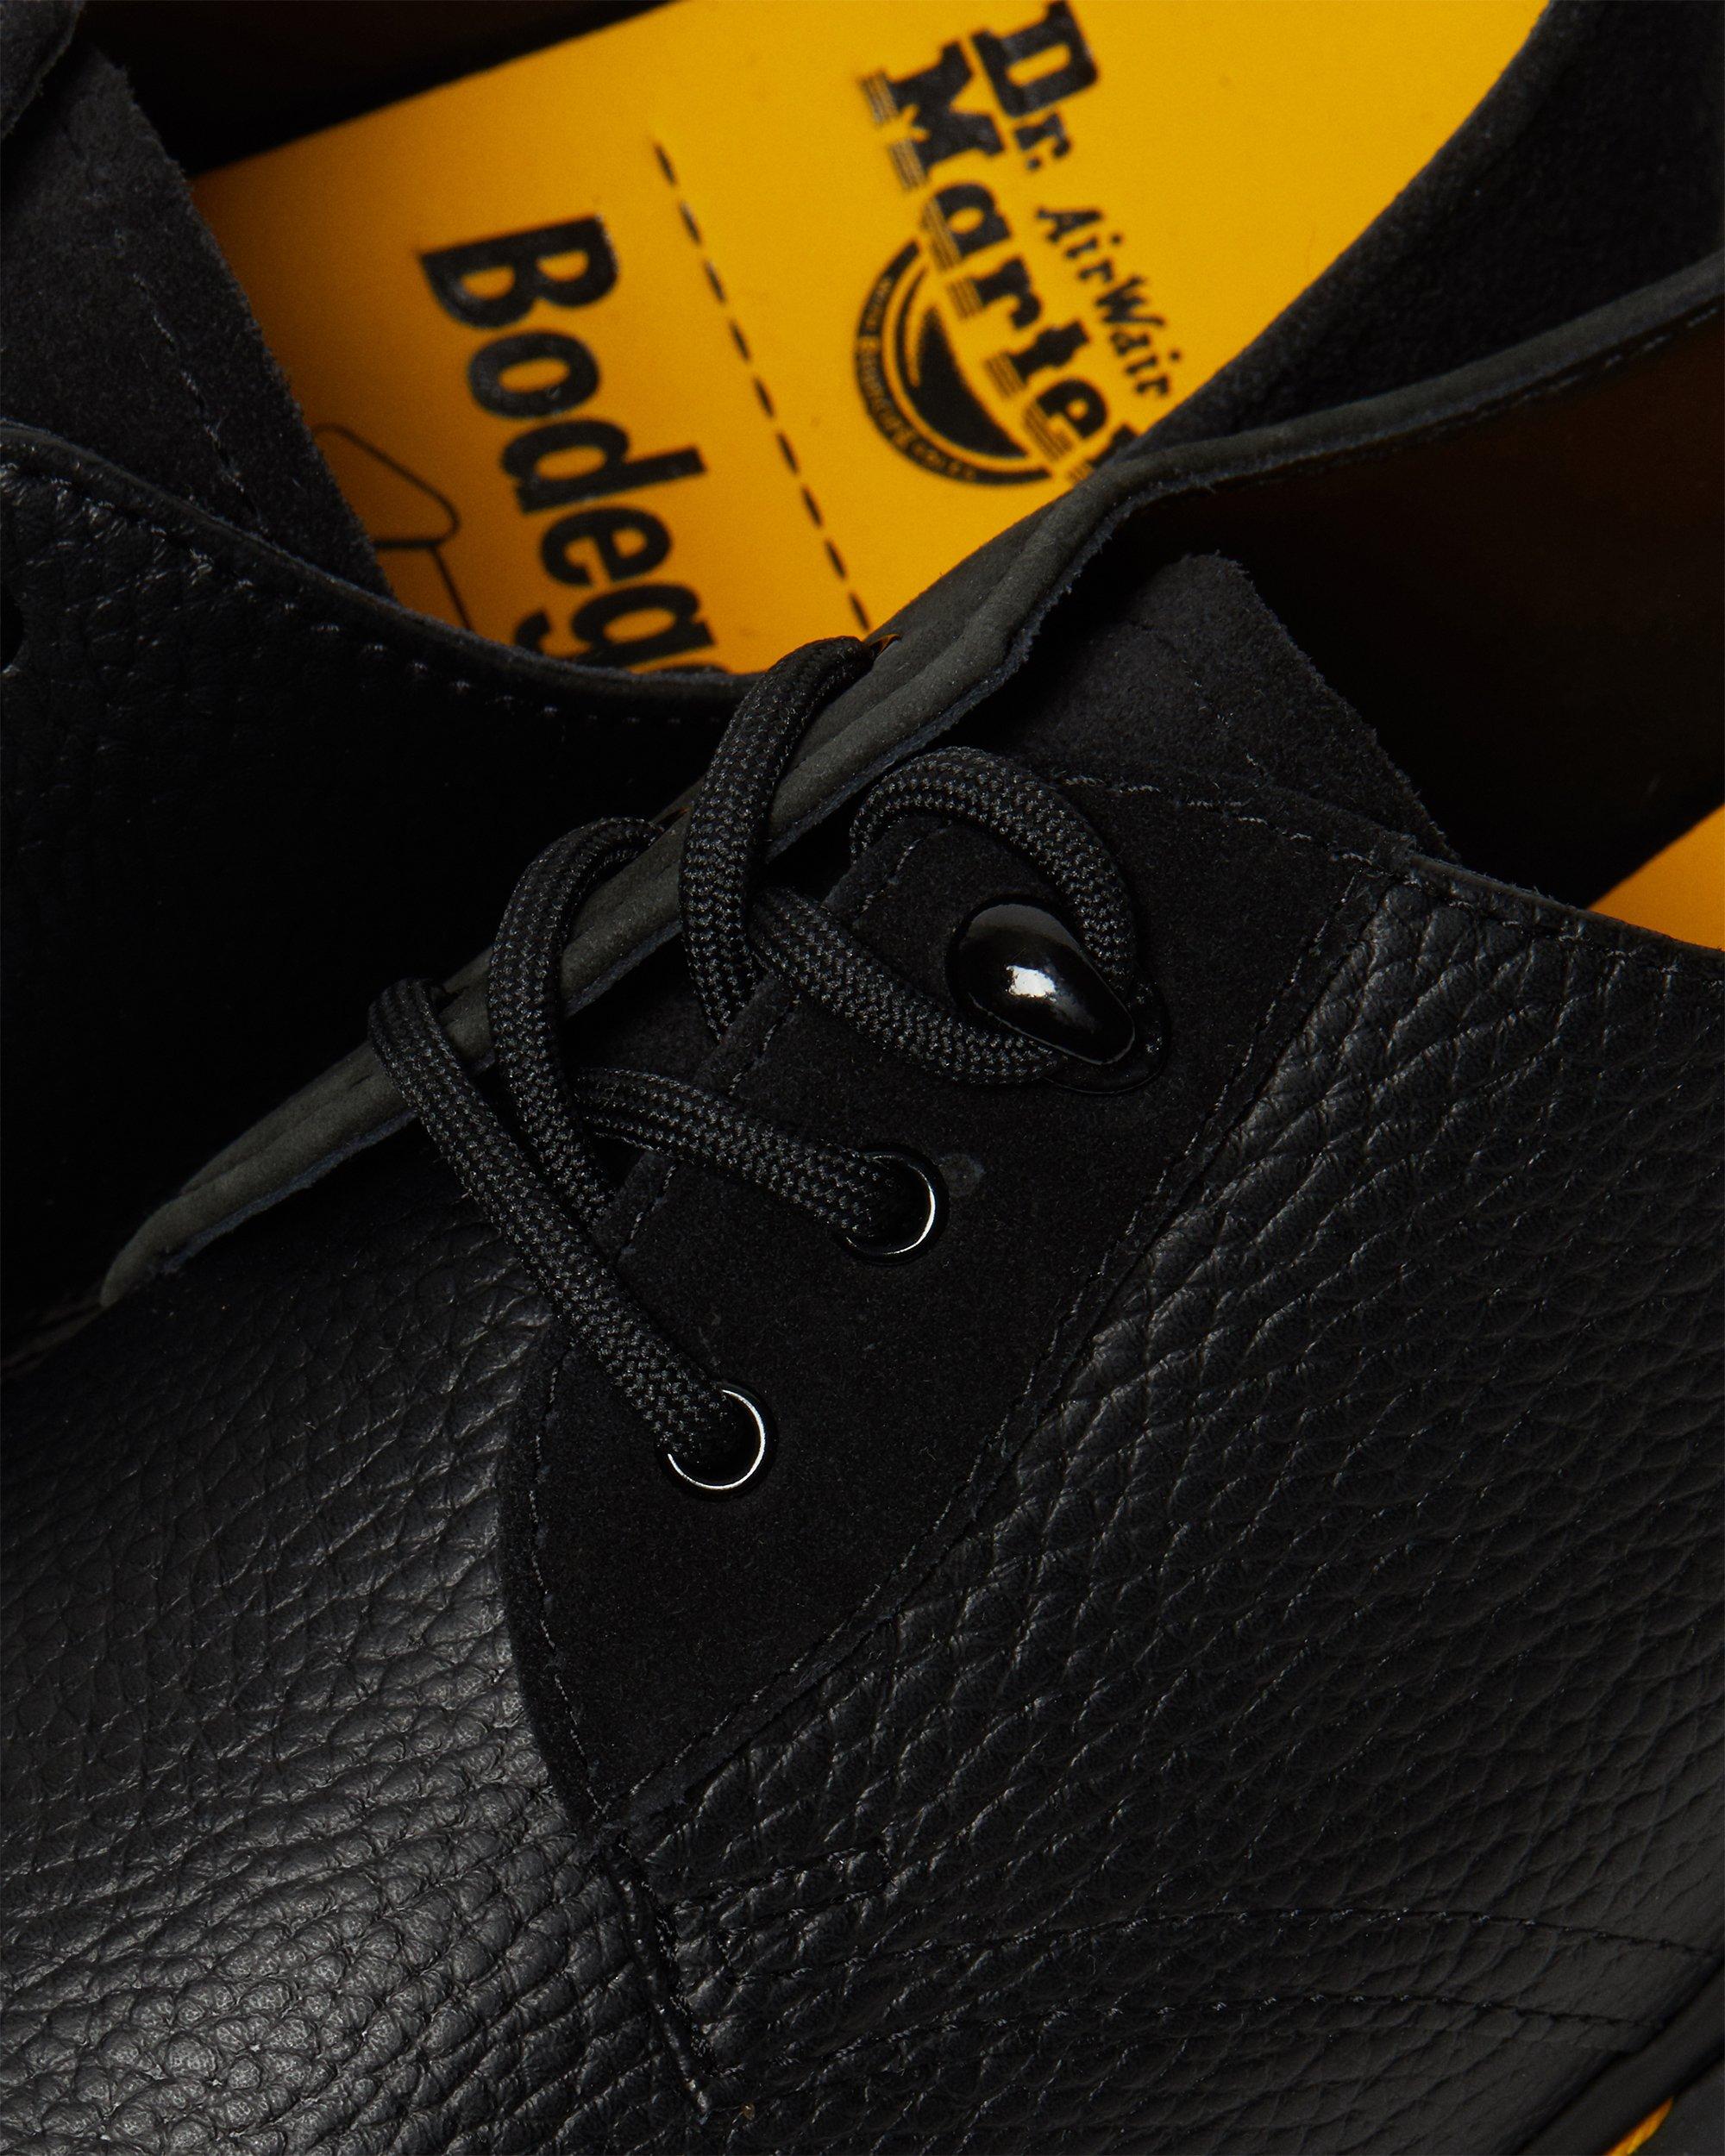 1461 Bodega II Leather Shoes in Black